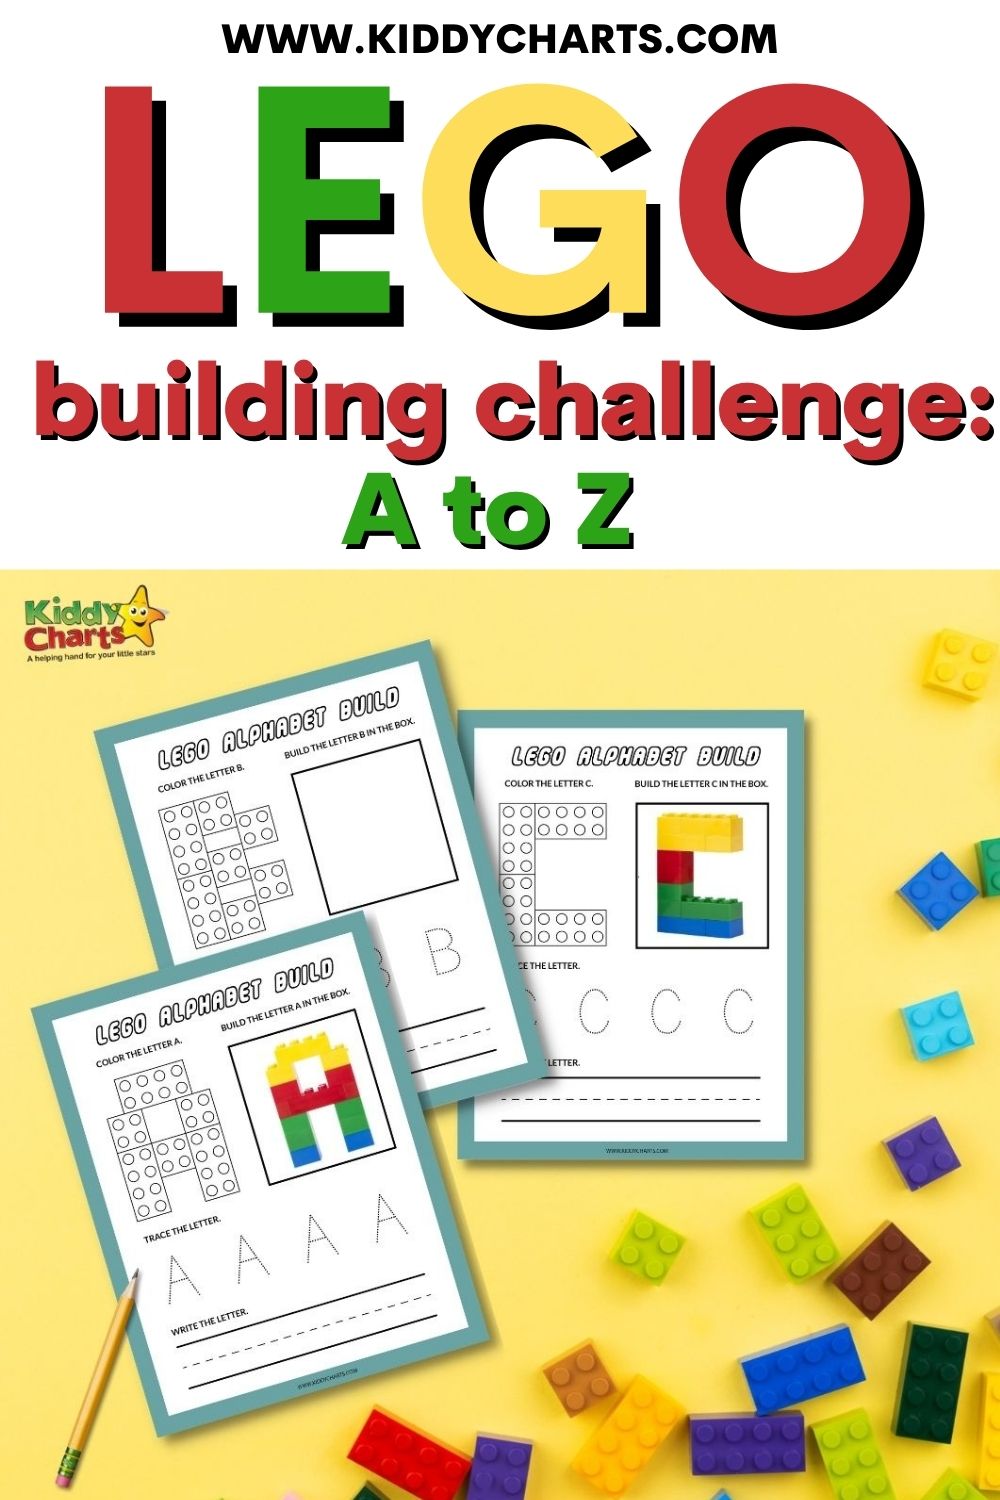 lego-building-challenge-and-team-ideas-kiddycharts